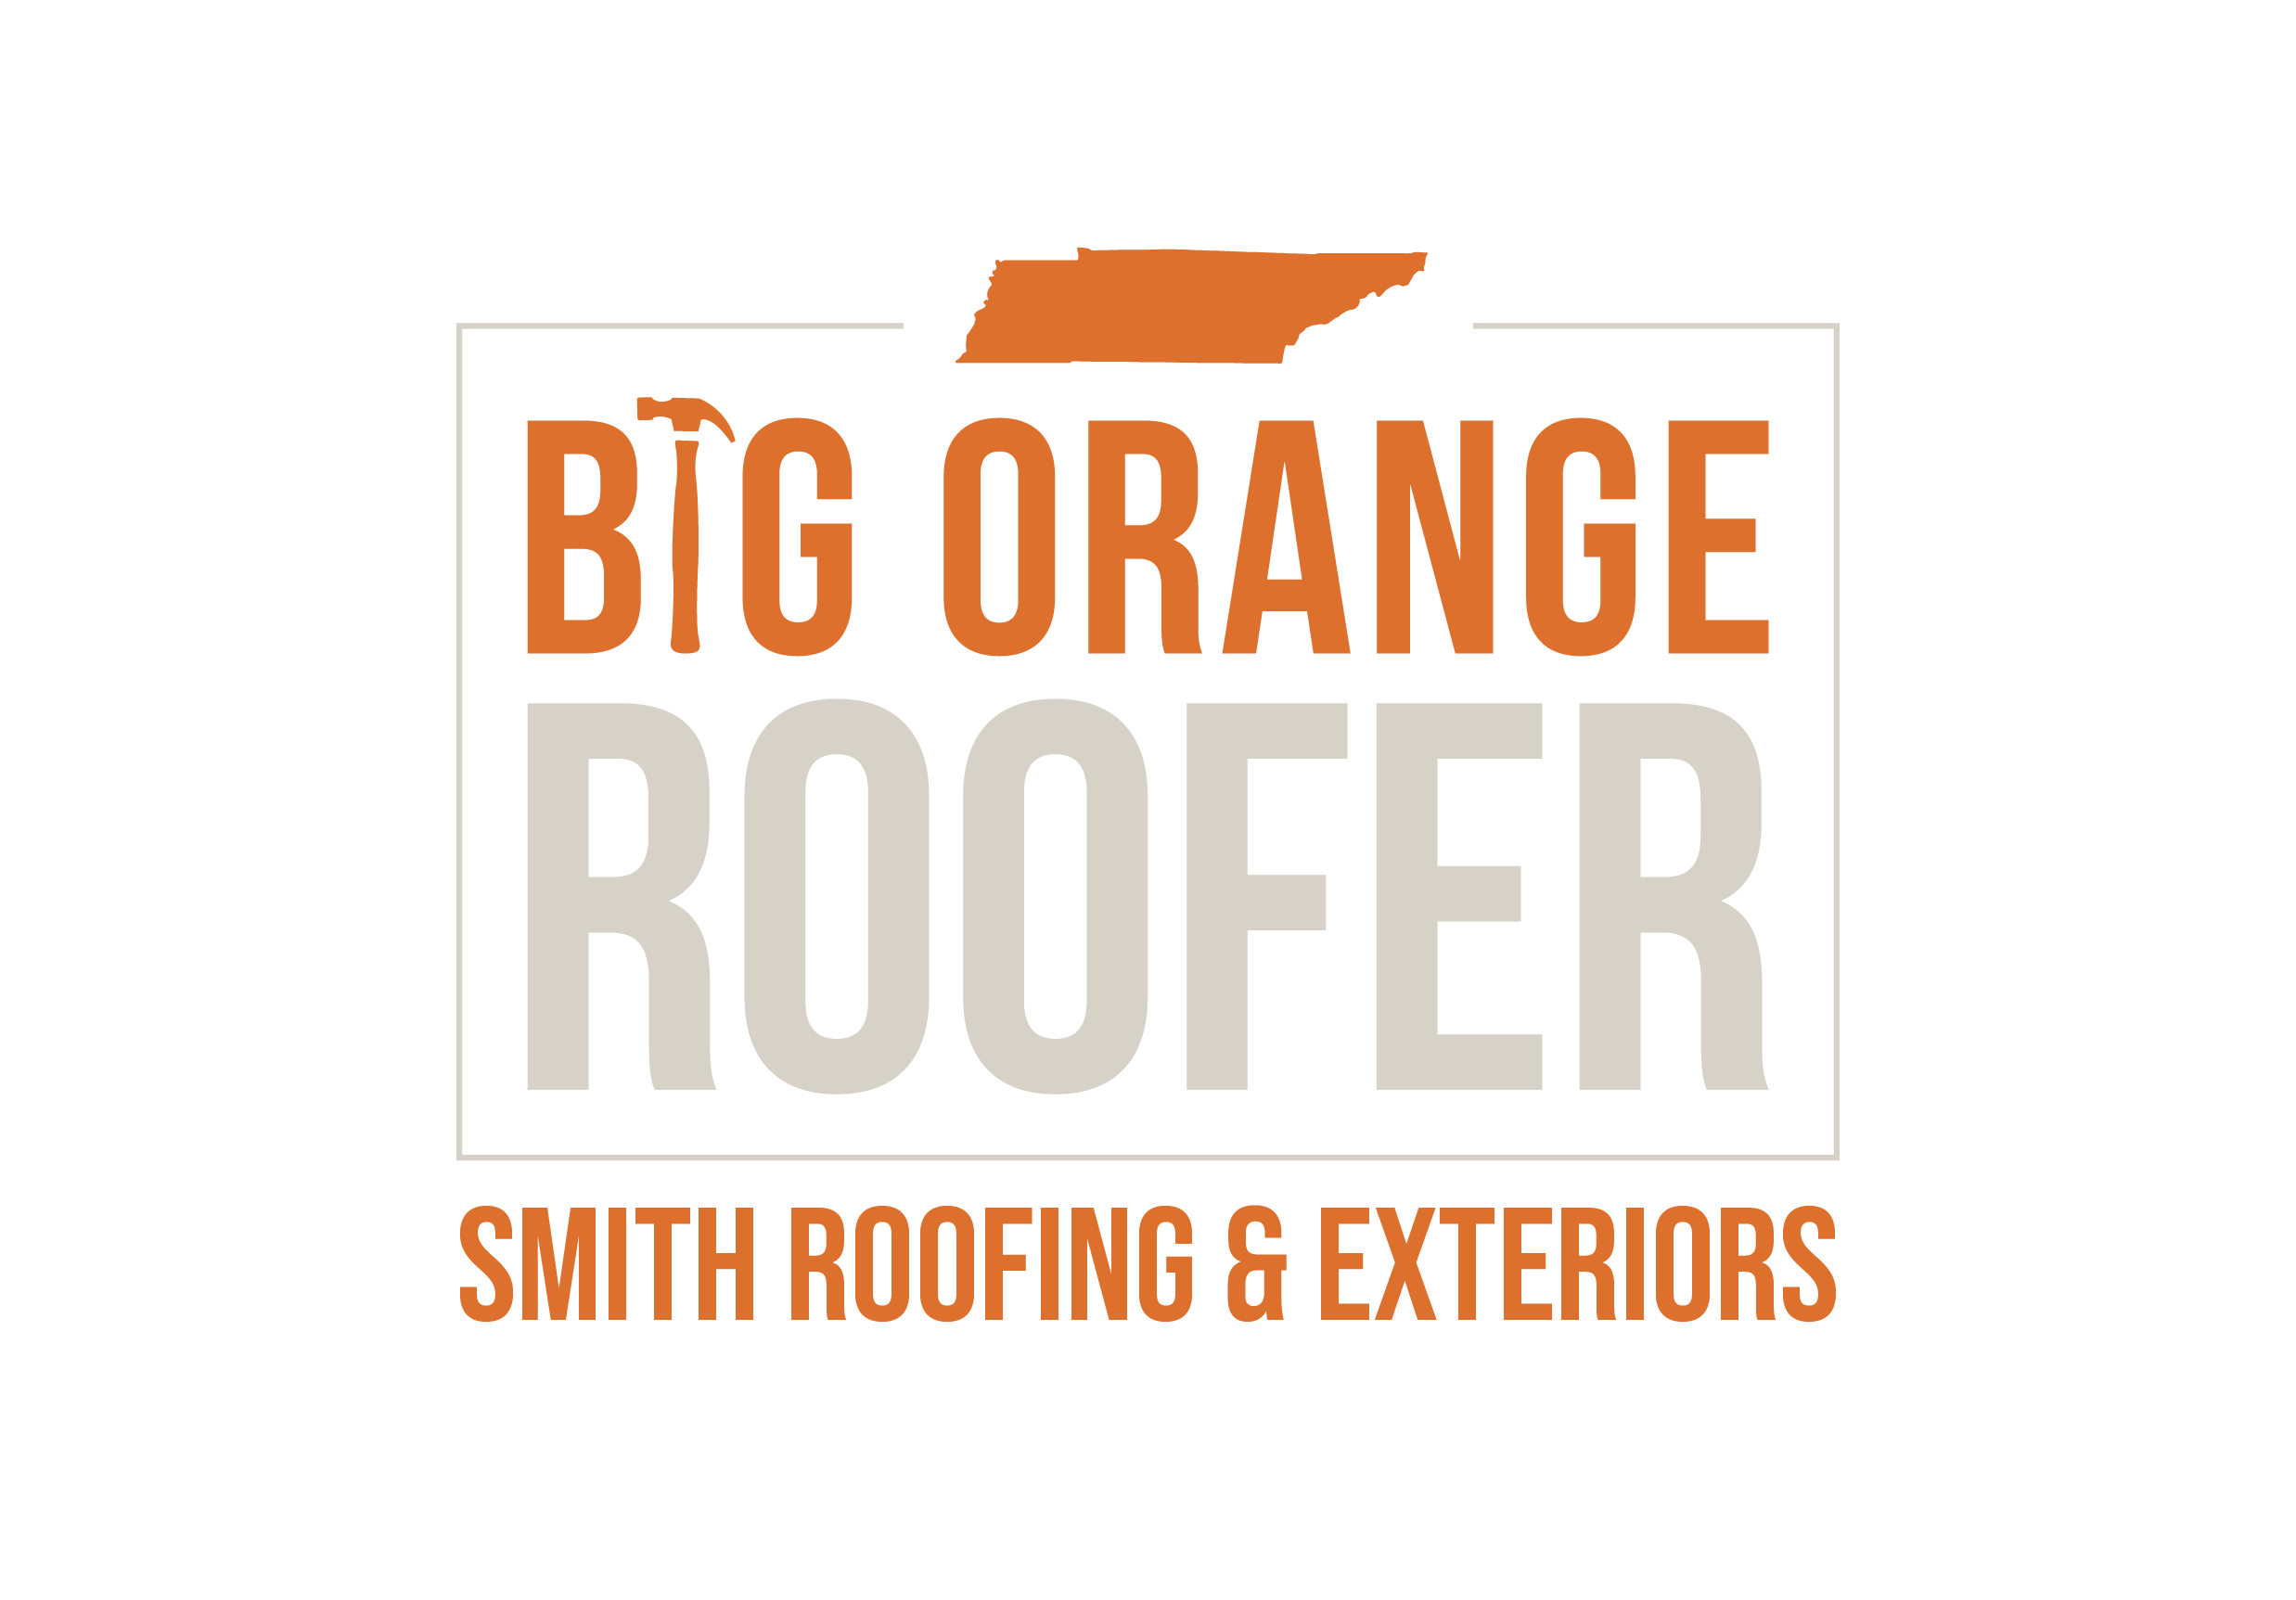 Big Orange Roofer Smith Roofing & Exteriors